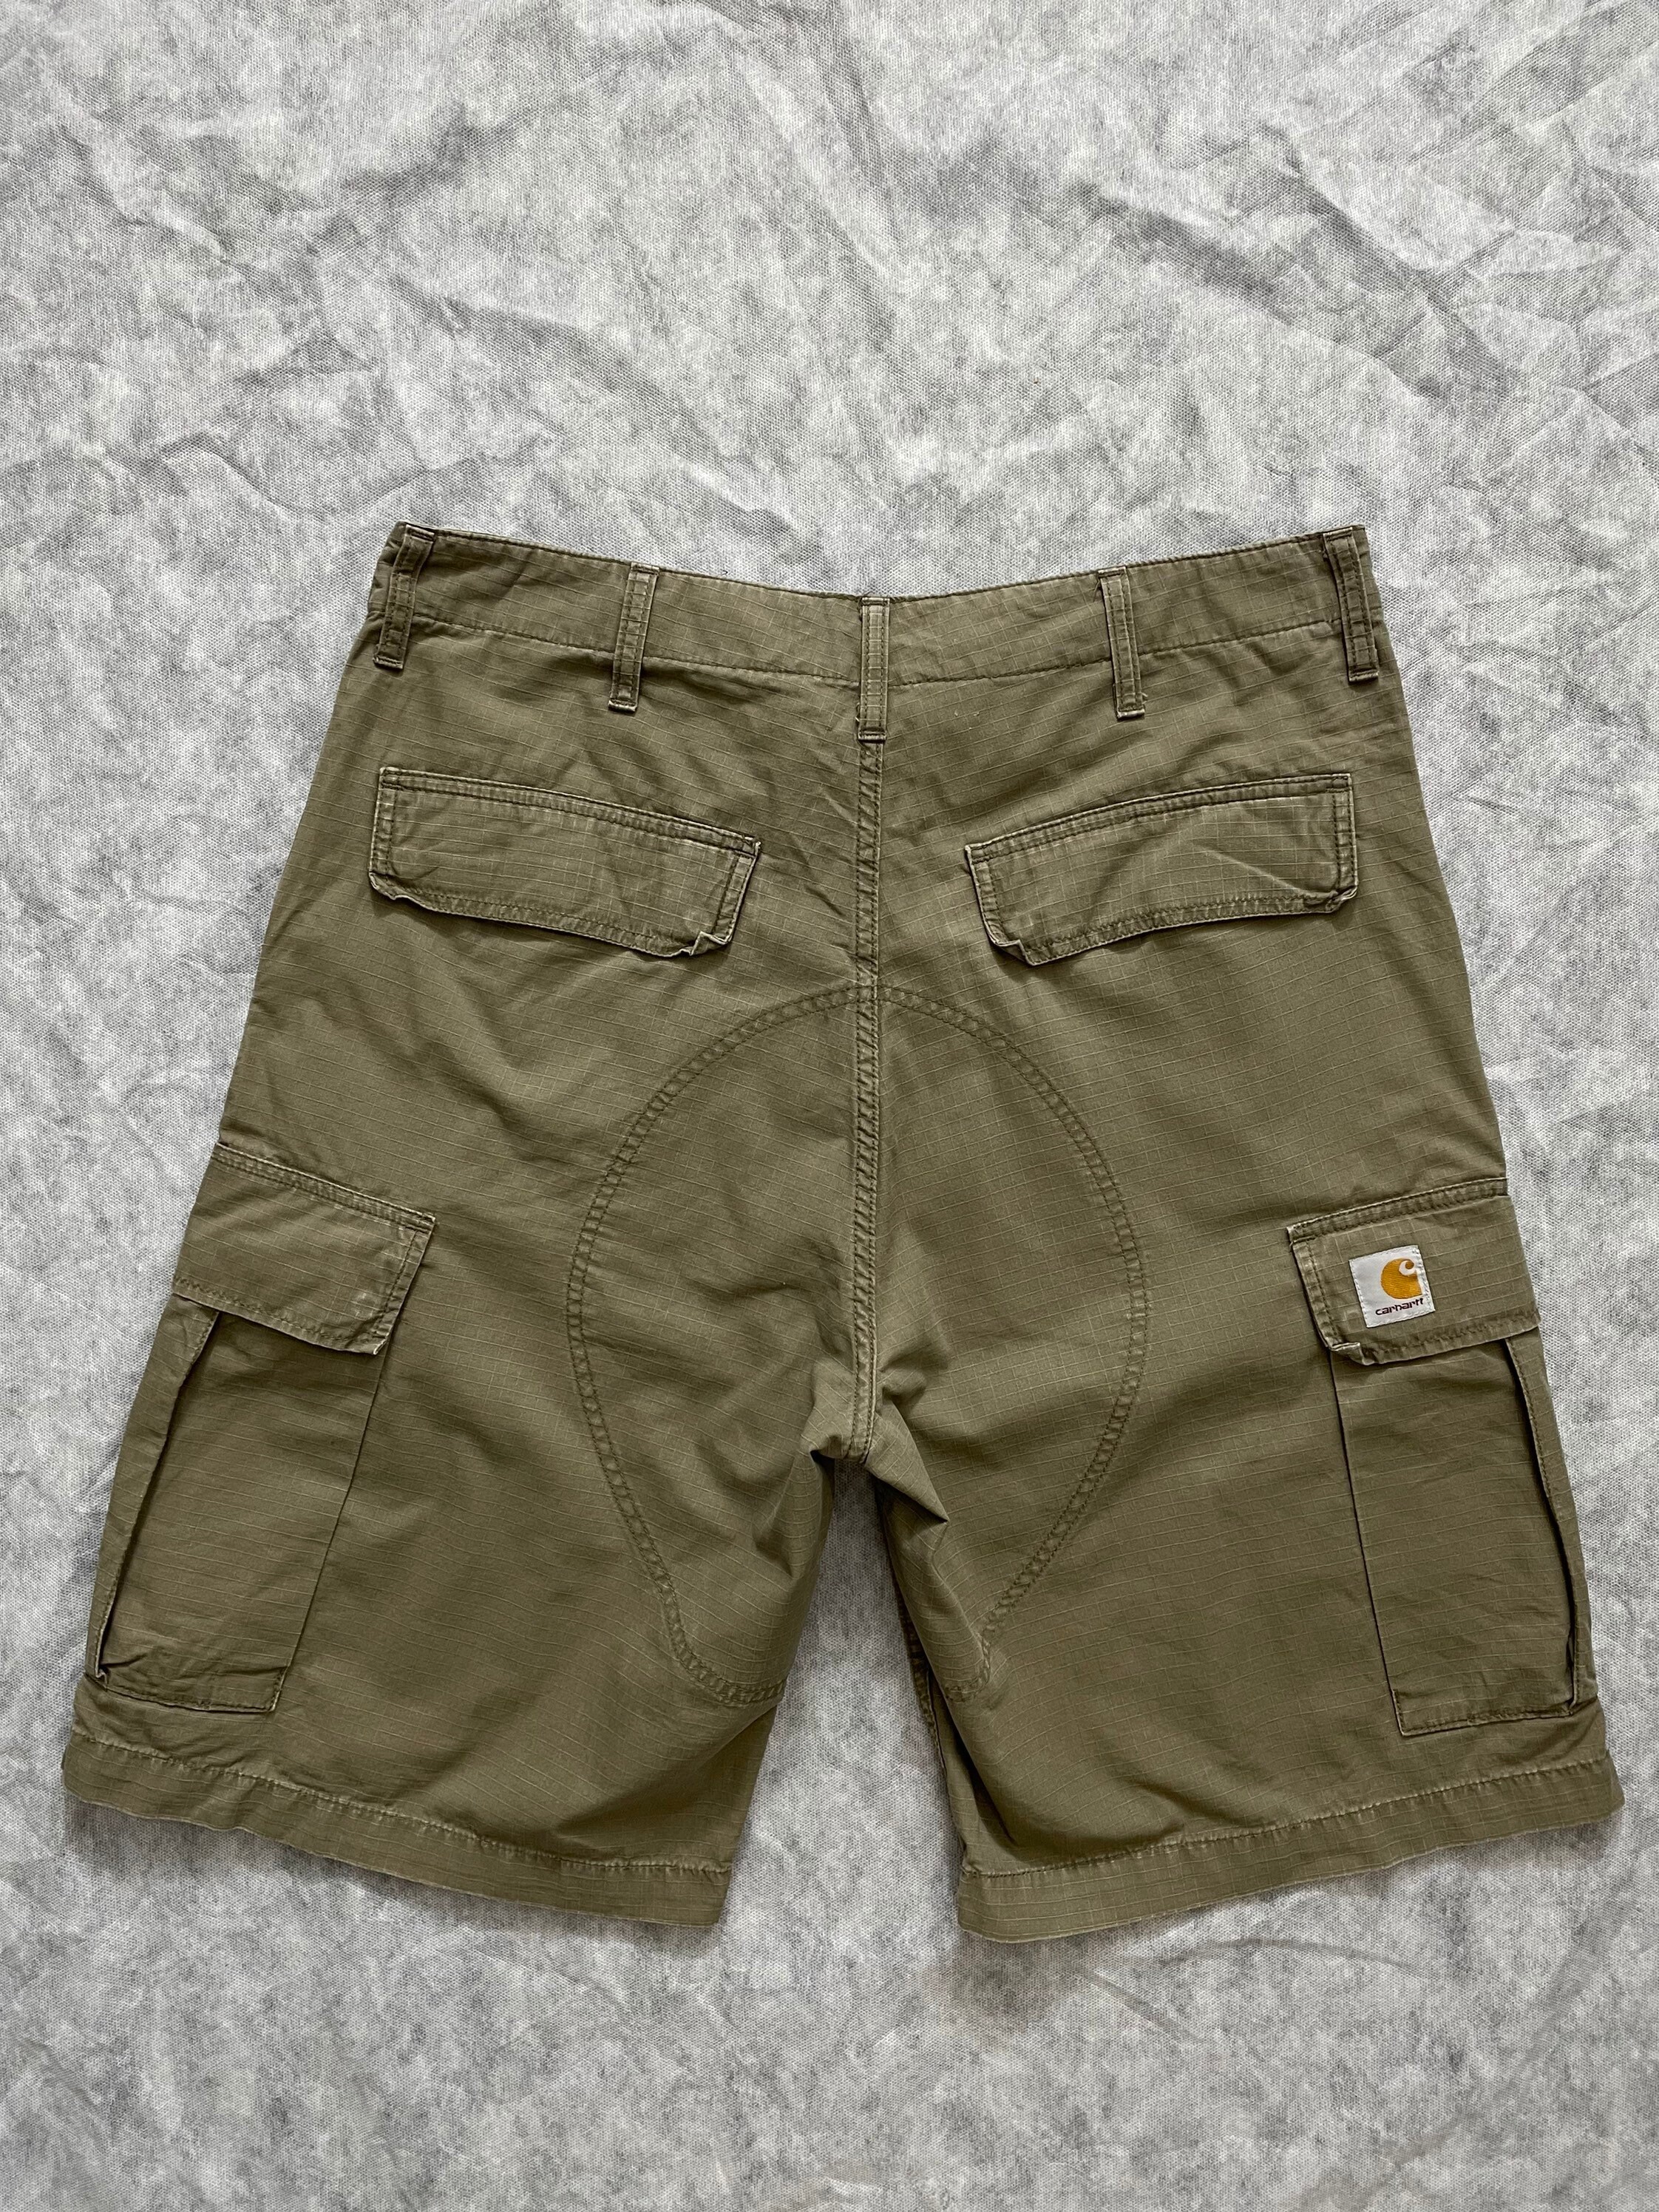 Mens Carhartt Cargo bermuda shorts size 33 | Etsy